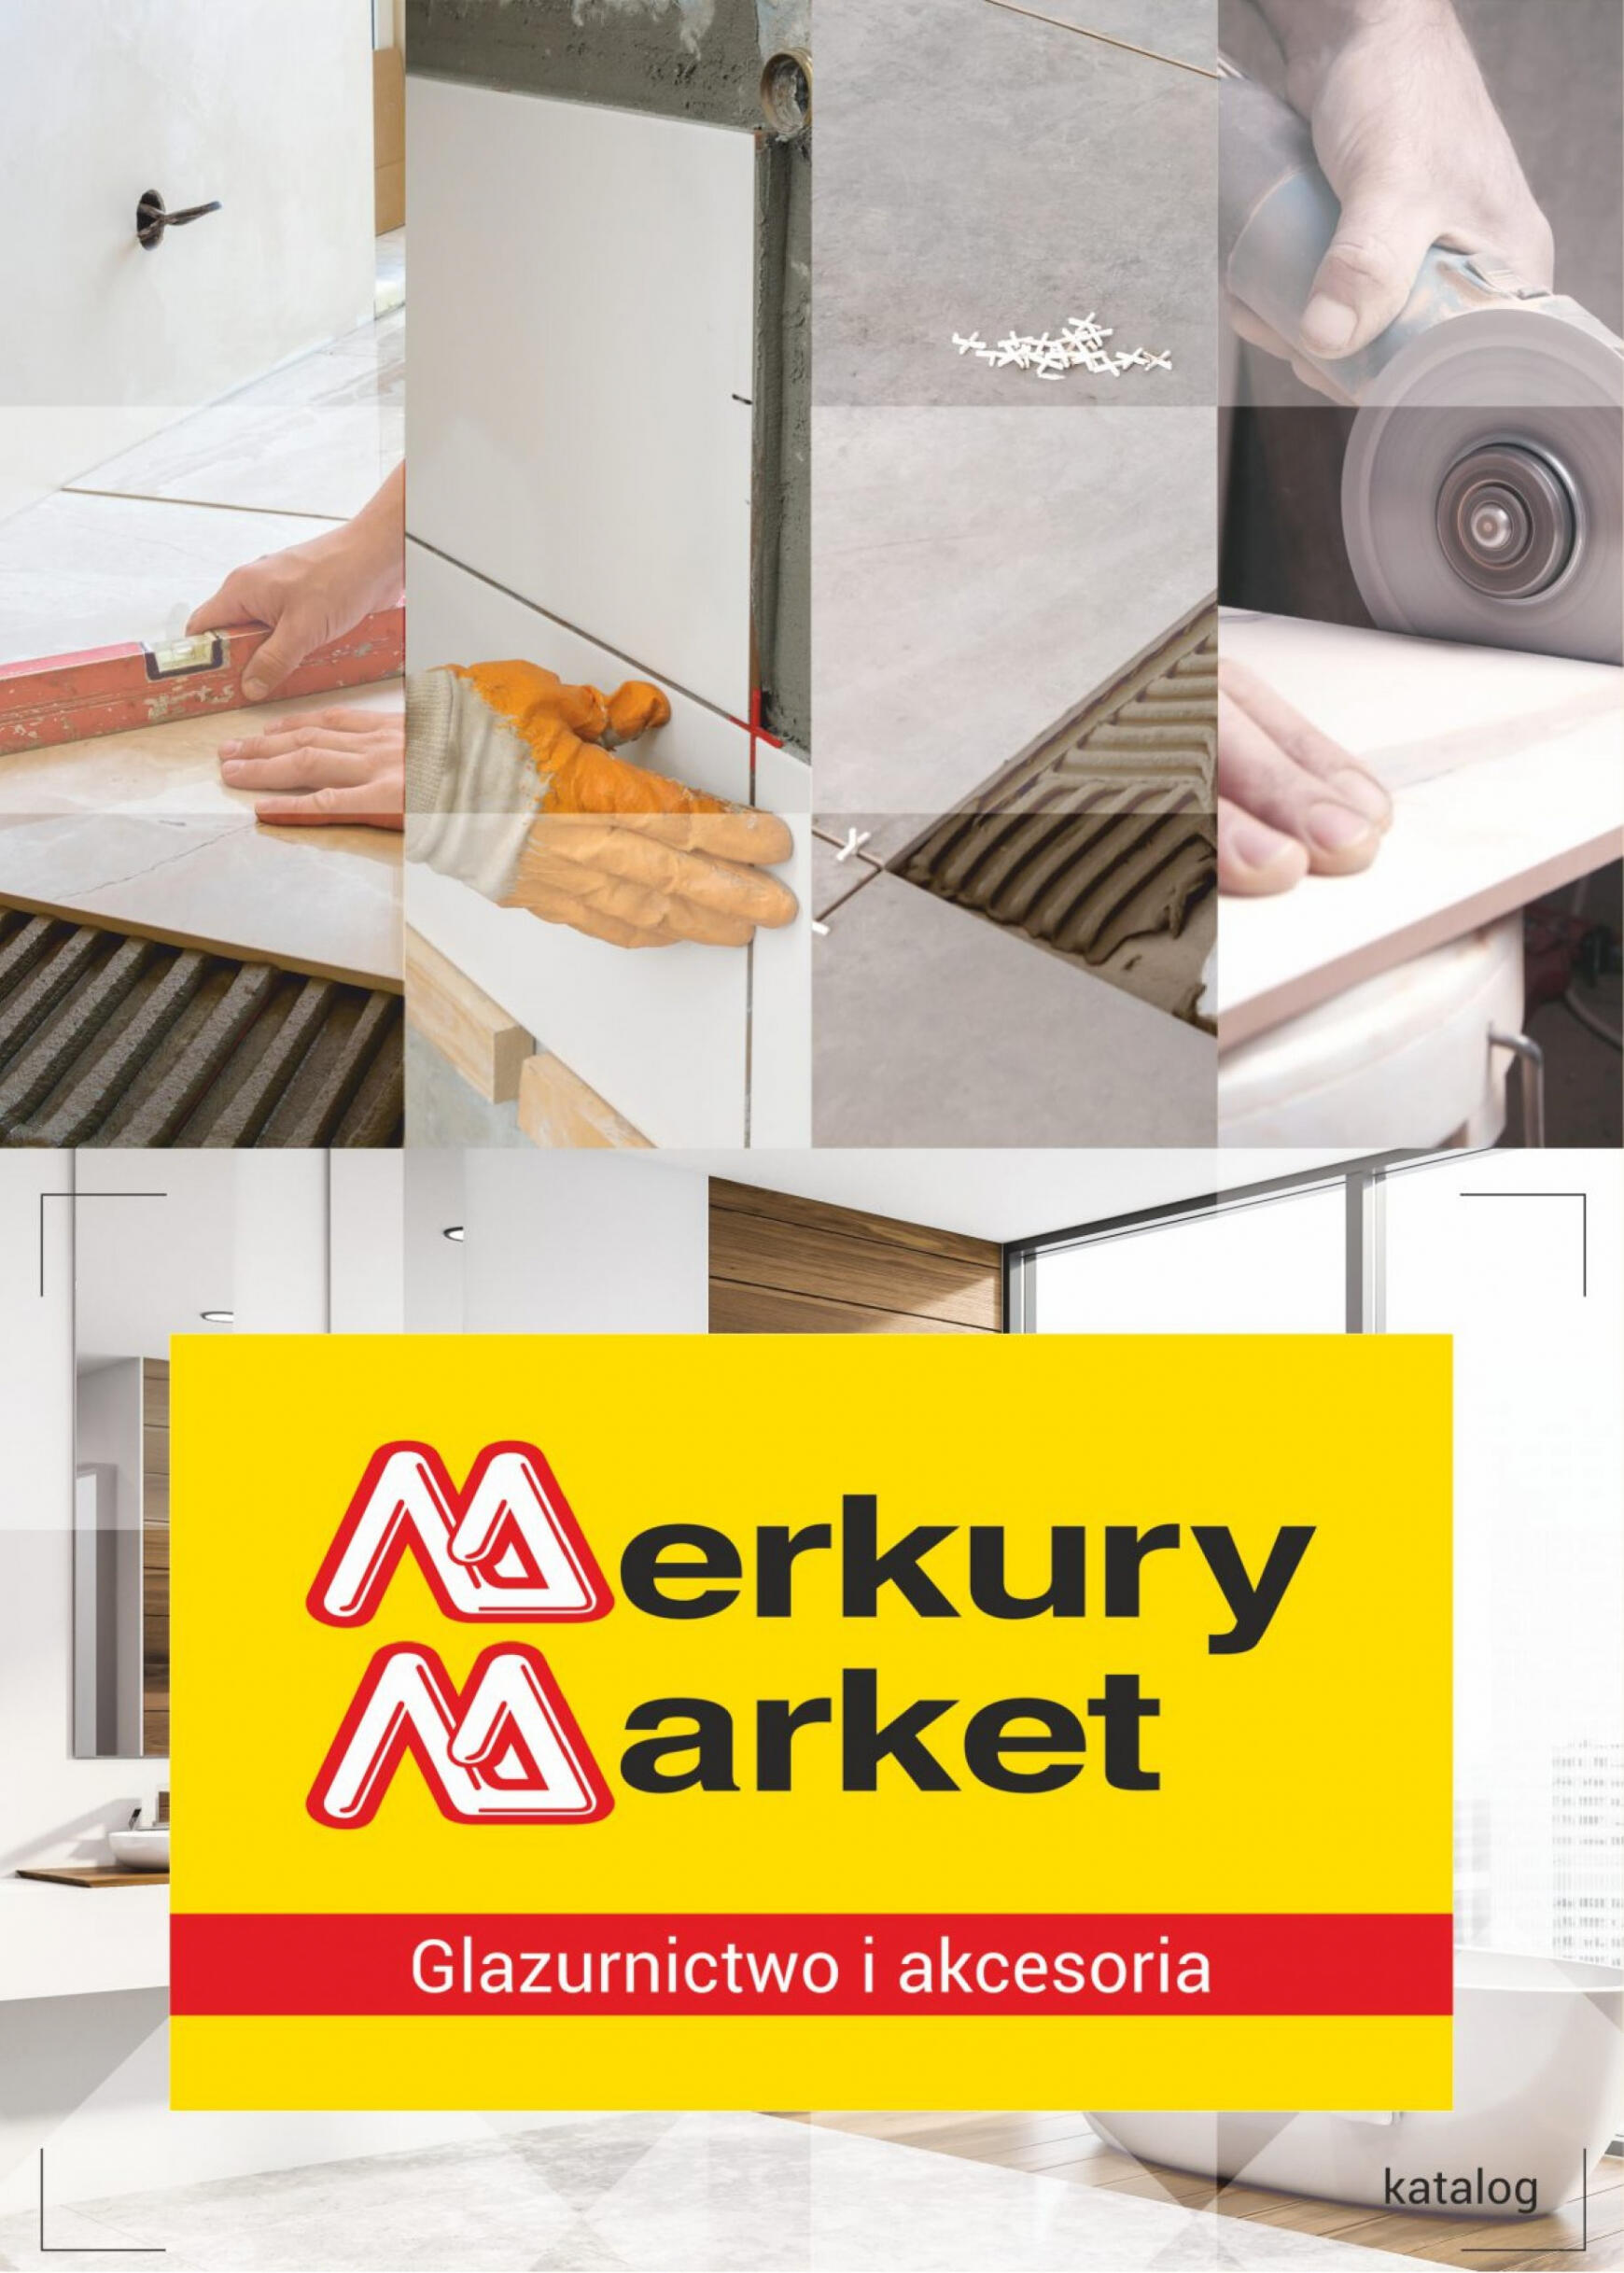 merkury-market - Merkury Market - Glazurnictwo - page: 1